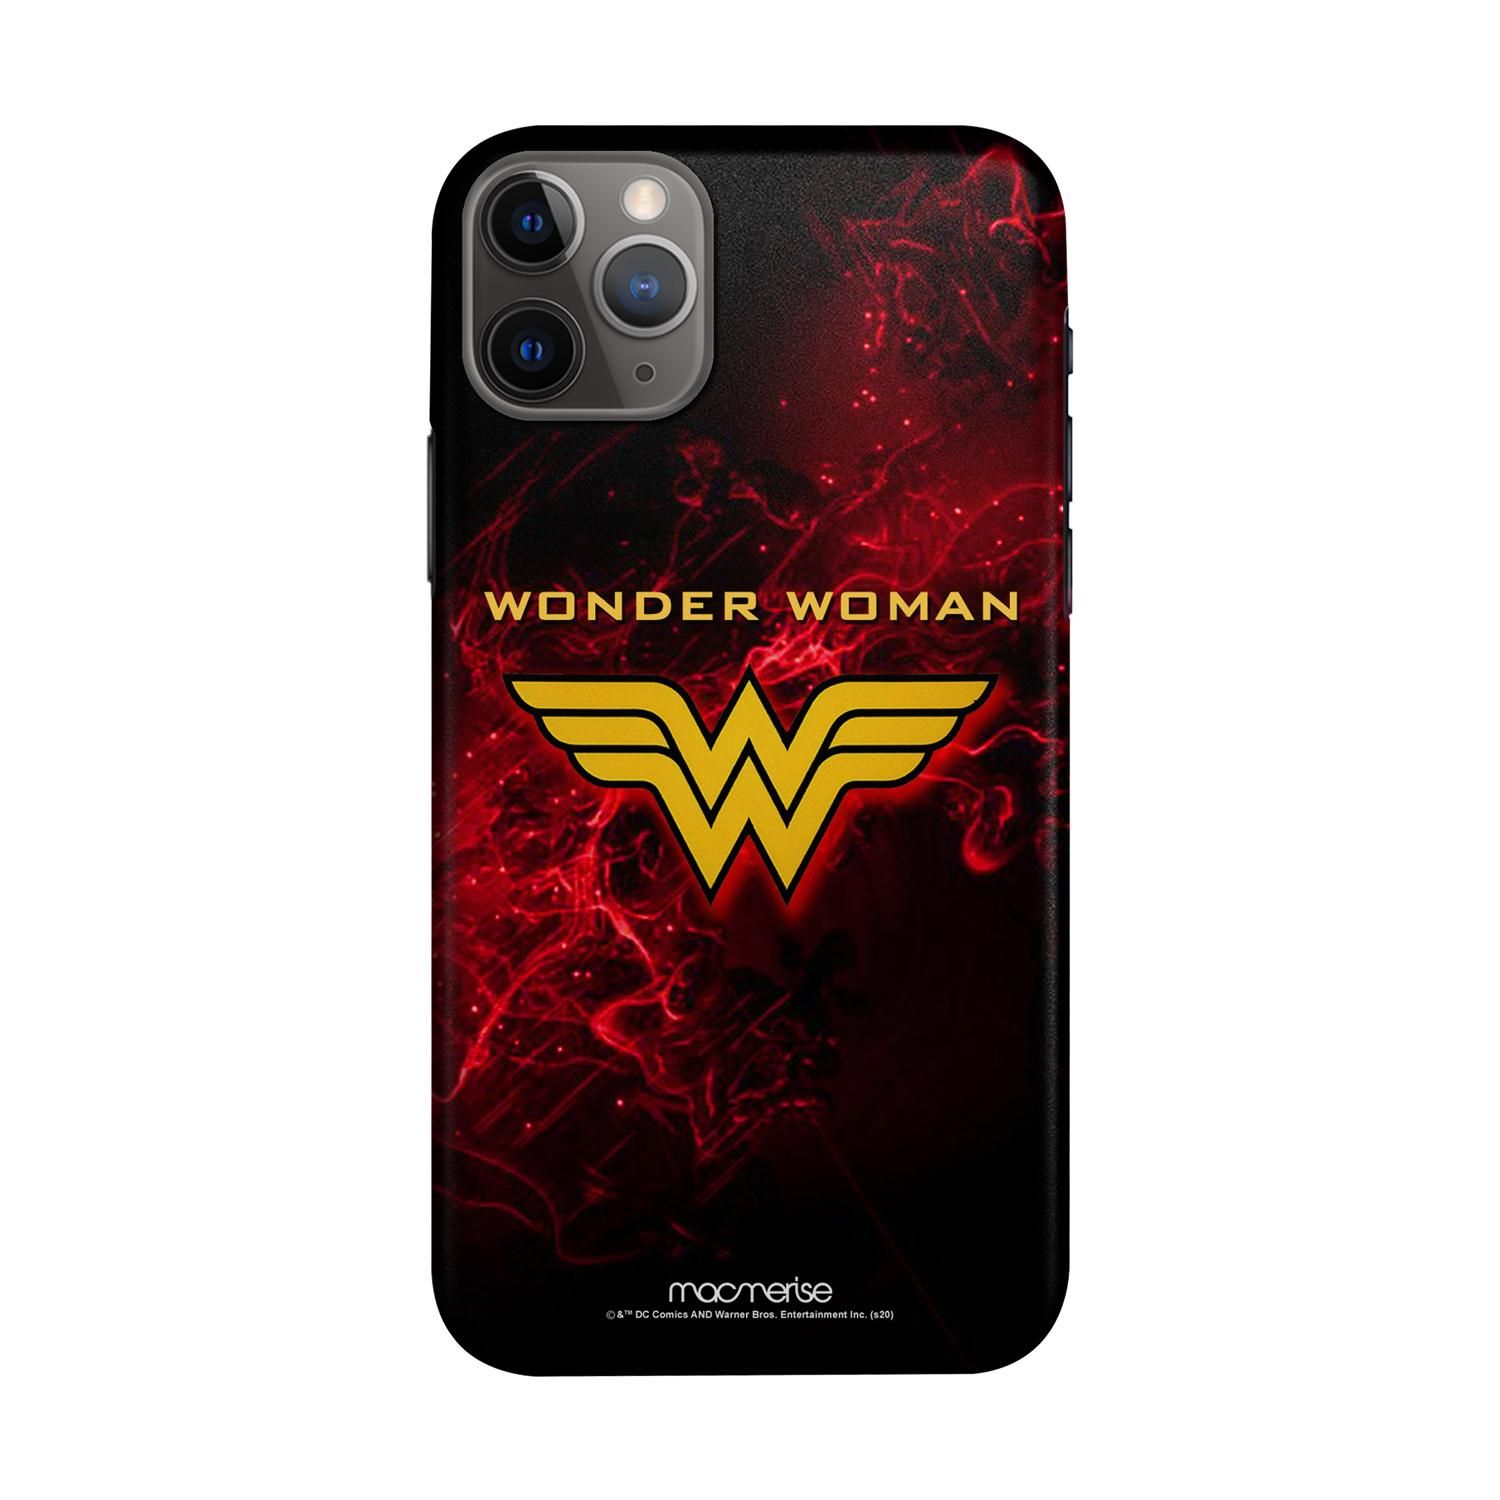 Buy Emblem Wonder Woman - Sleek Phone Case for iPhone 11 Pro Online